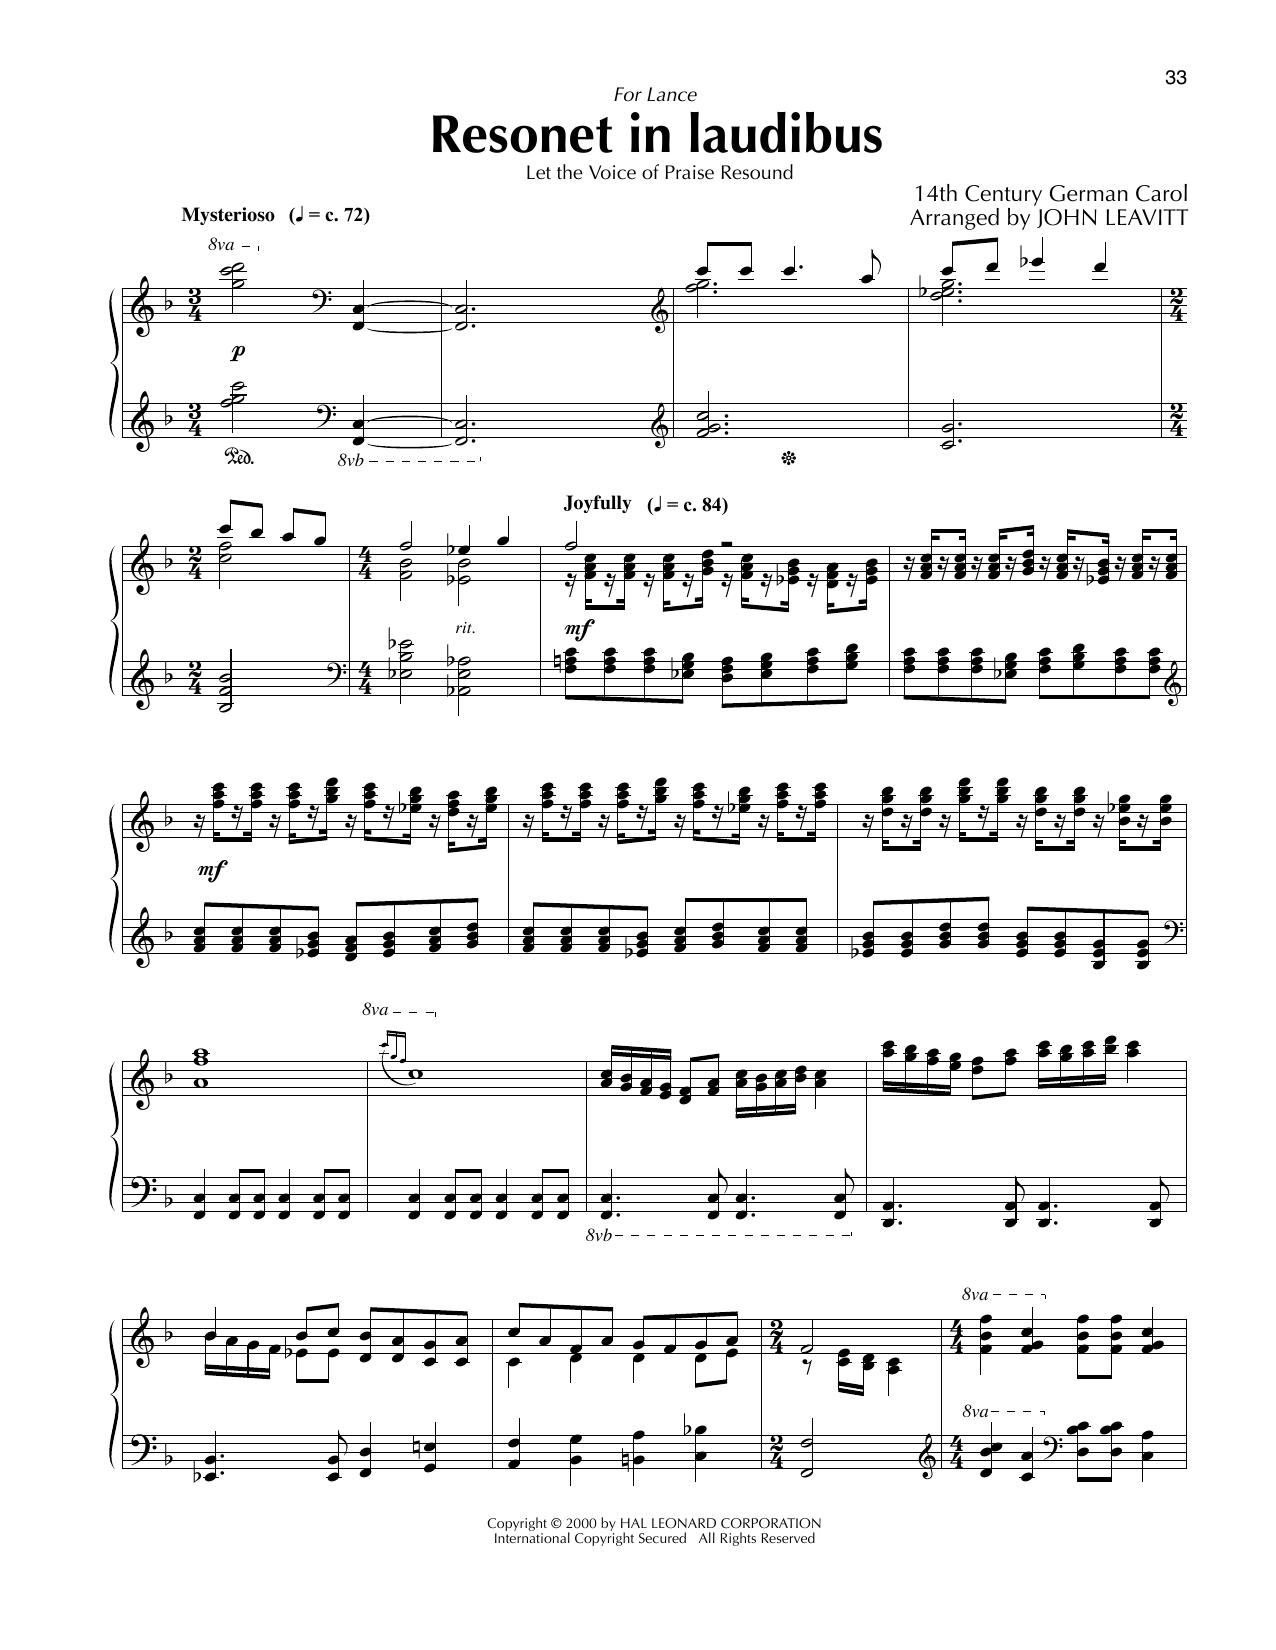 14th Century German Carol Resonet In Laudibus (arr. John Leavitt) sheet music notes and chords arranged for Piano Solo